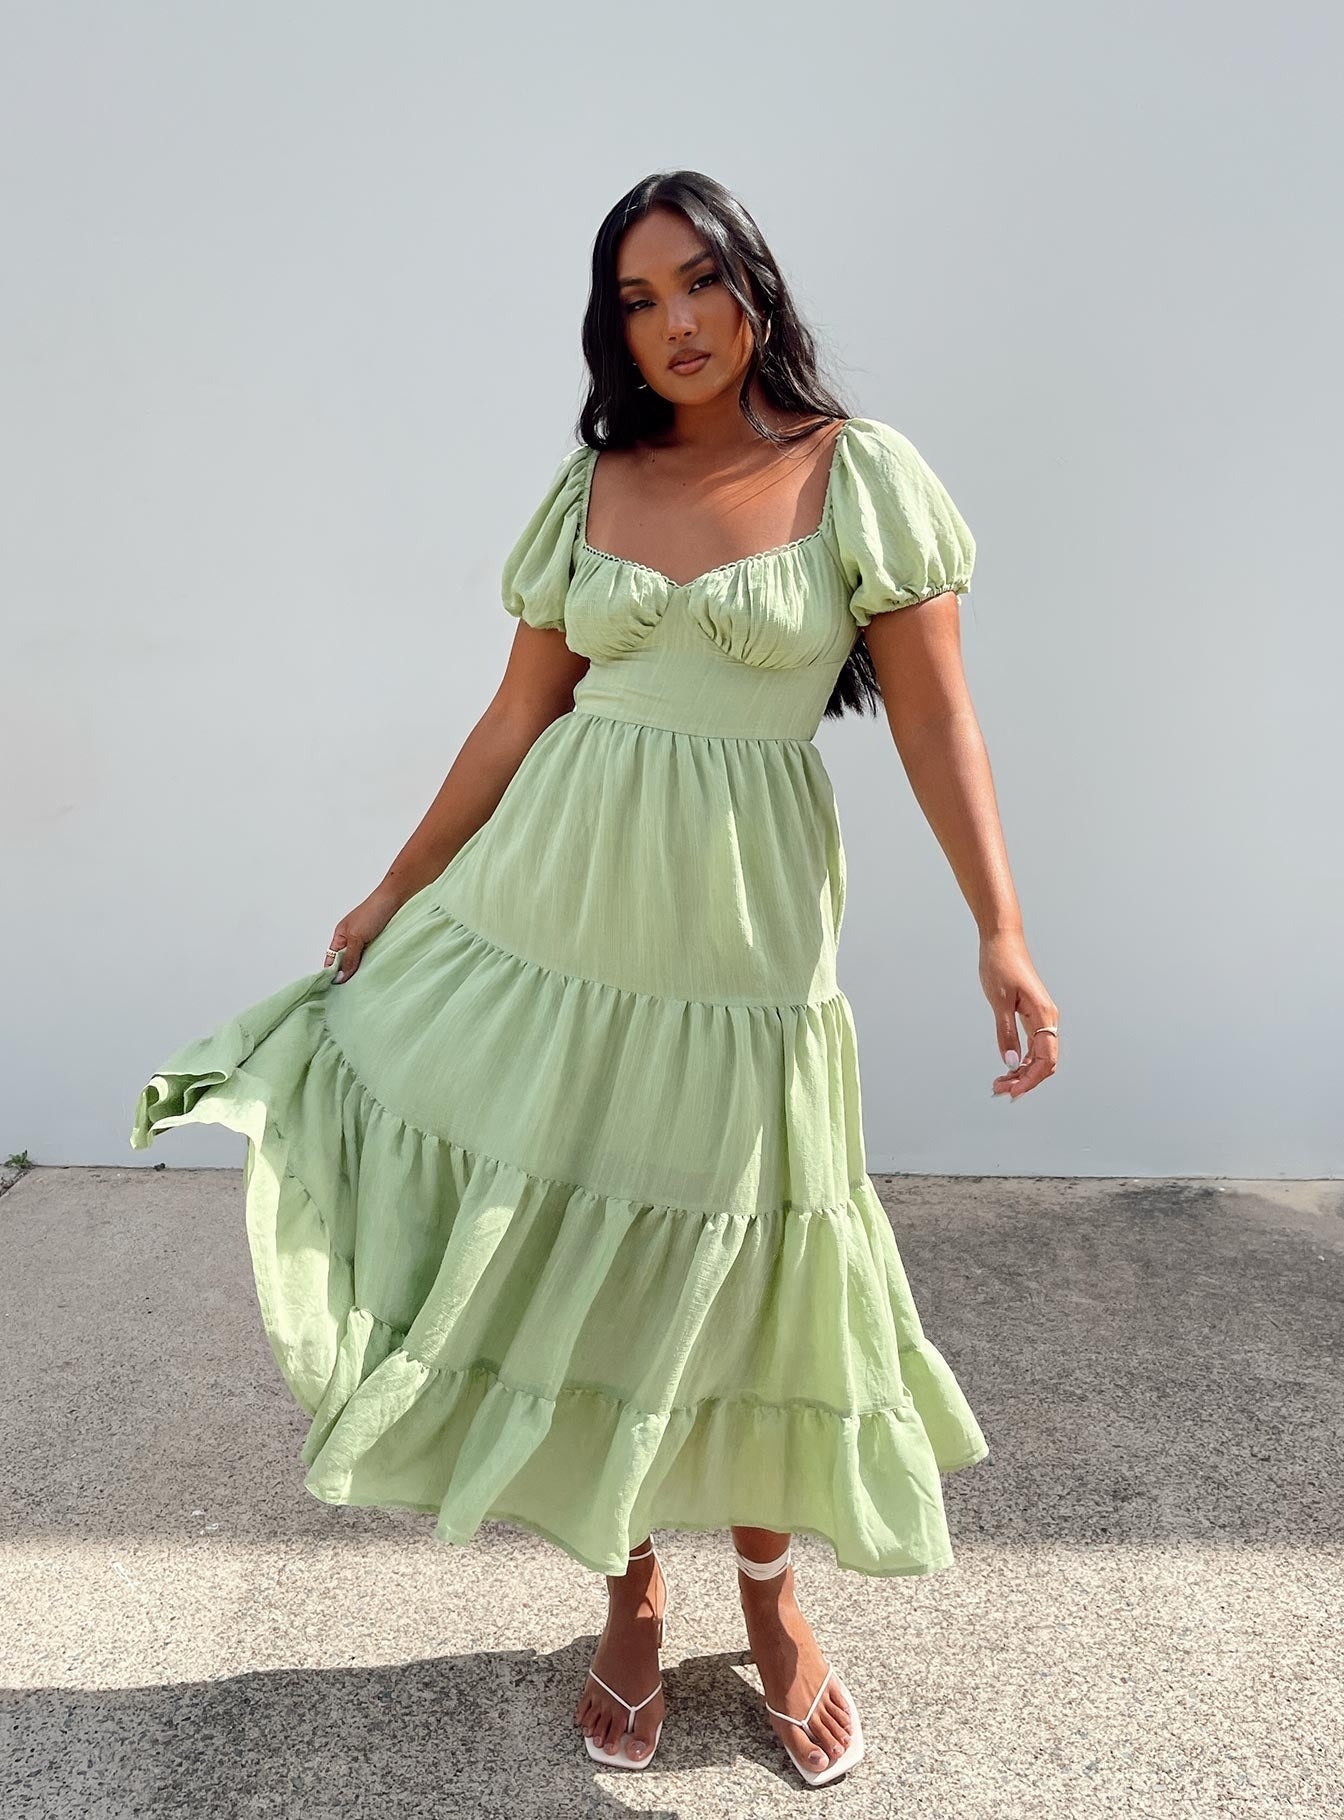 Model wearing the pale green midi dress